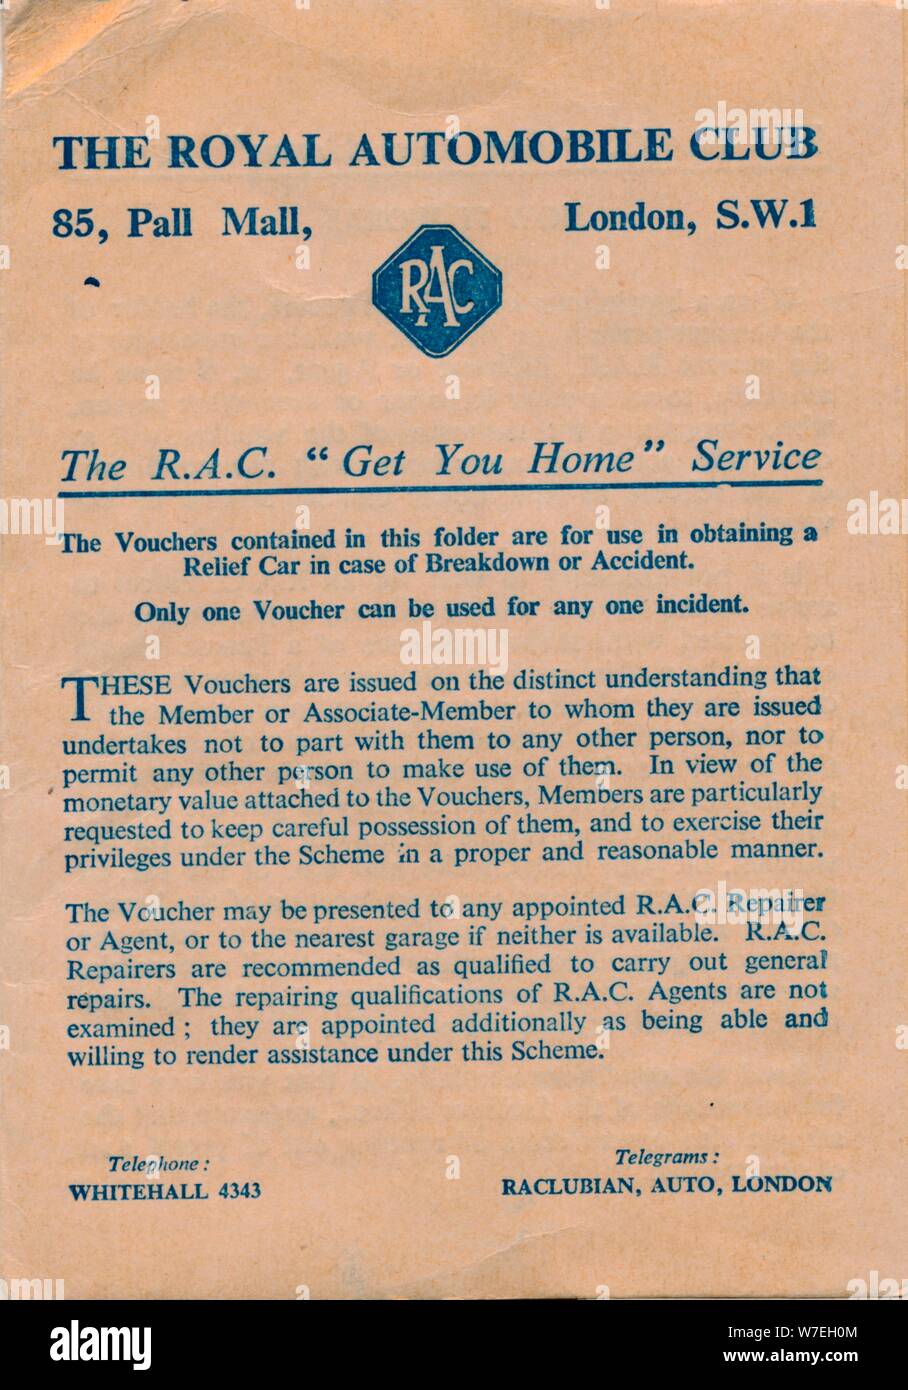 The Royal Automobile Club vouchers, 1952. Artist: Unknown Stock Photo